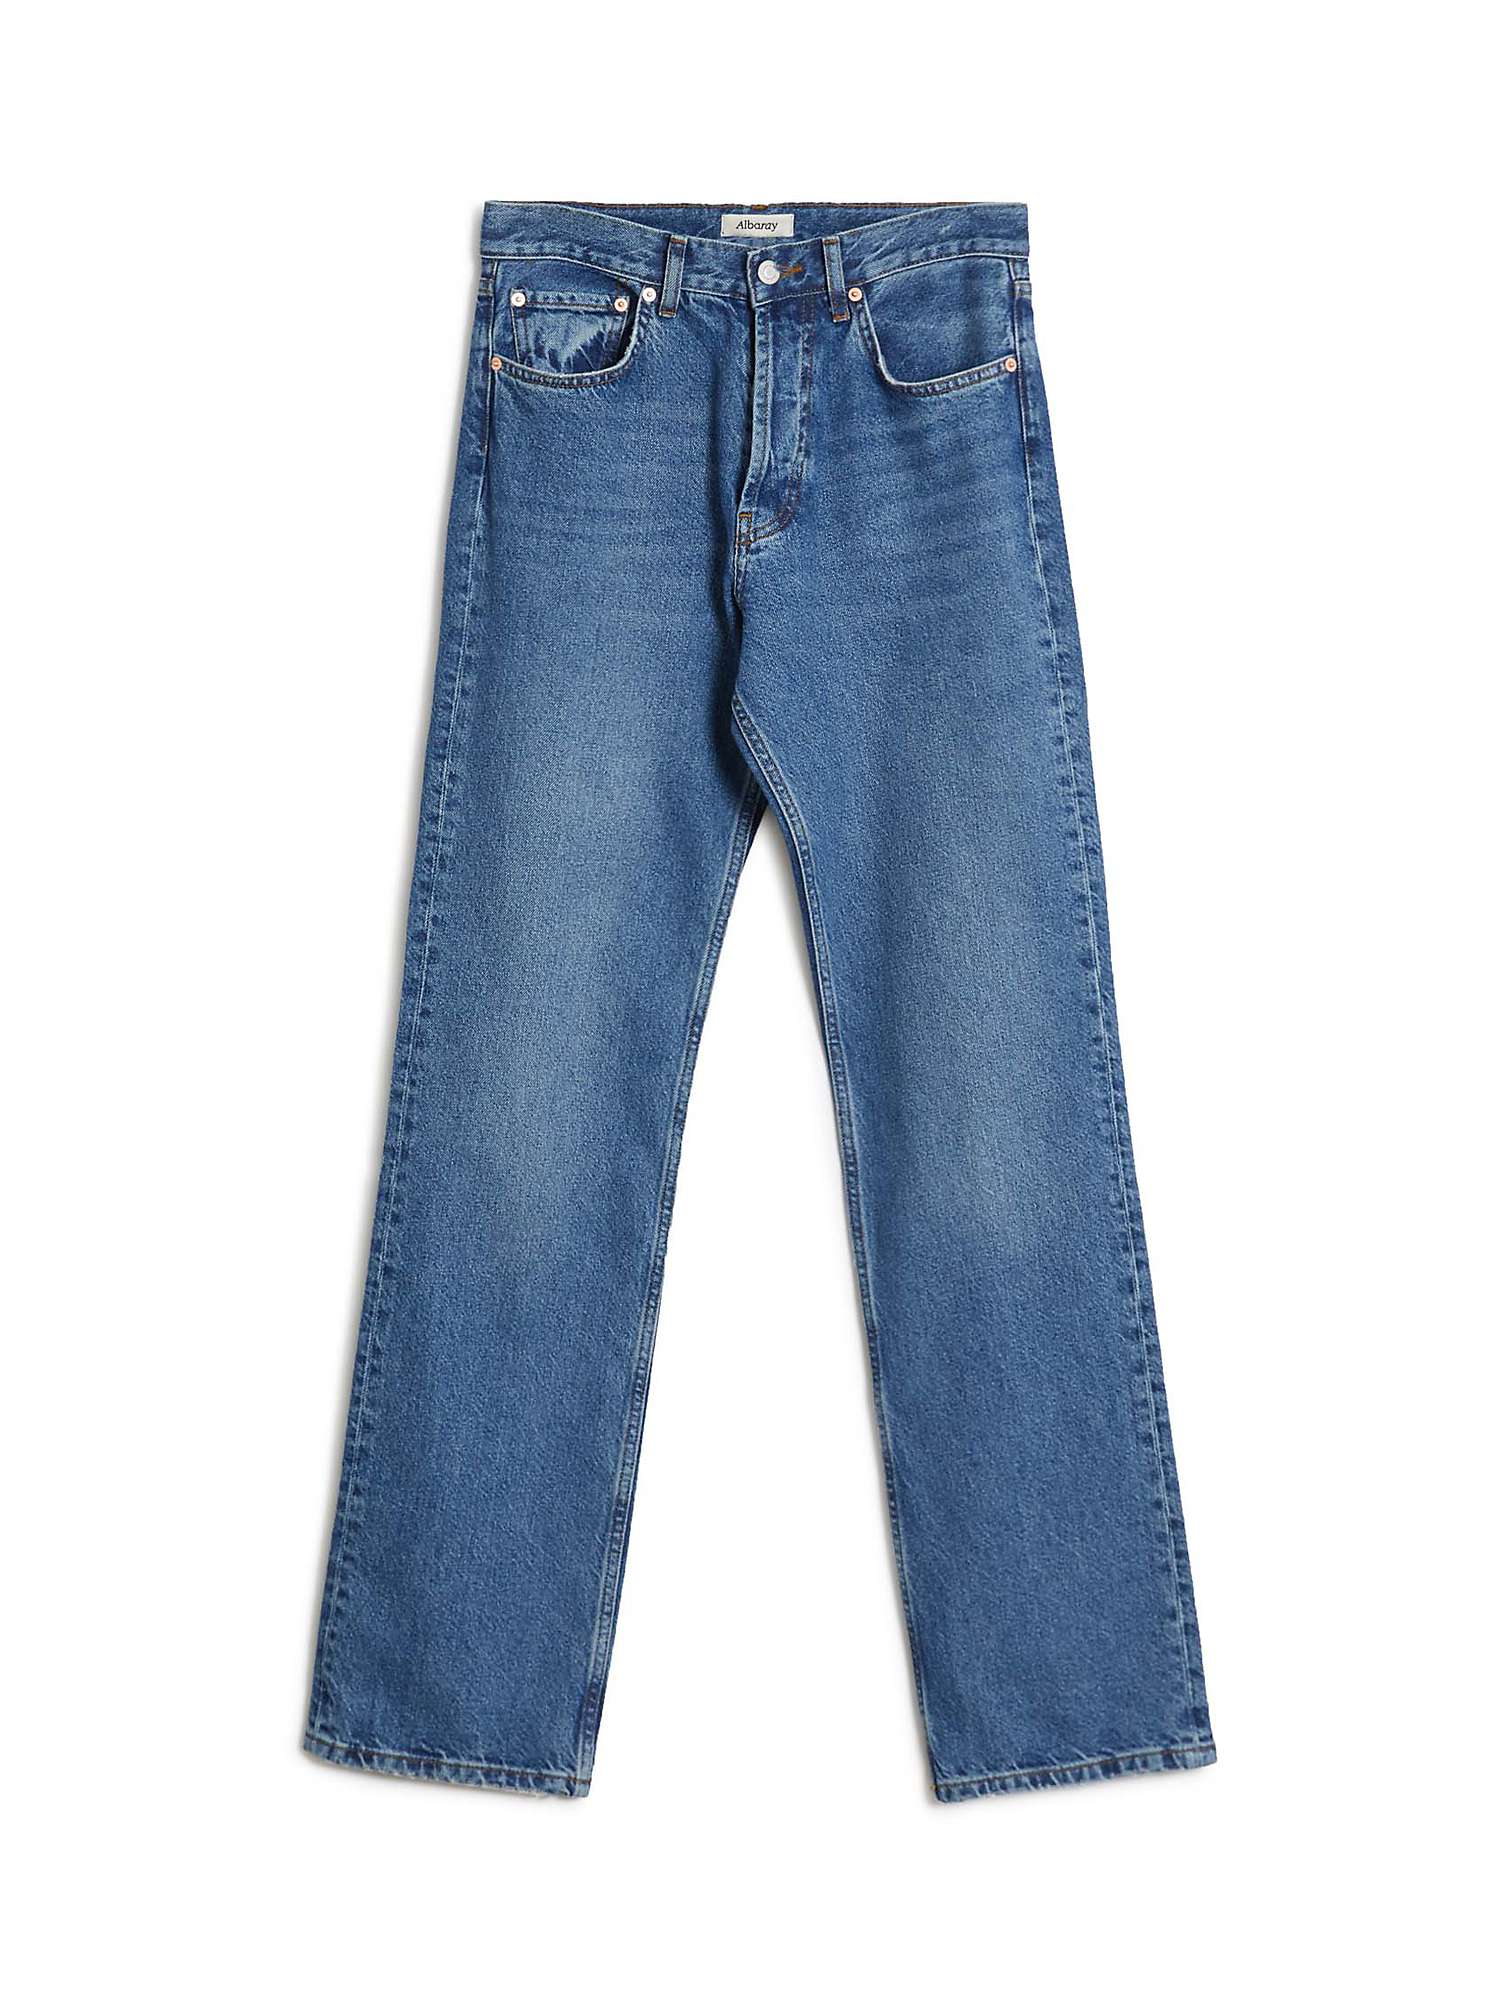 Buy Albaray 90s Straight Leg Jeans, Indigo Online at johnlewis.com